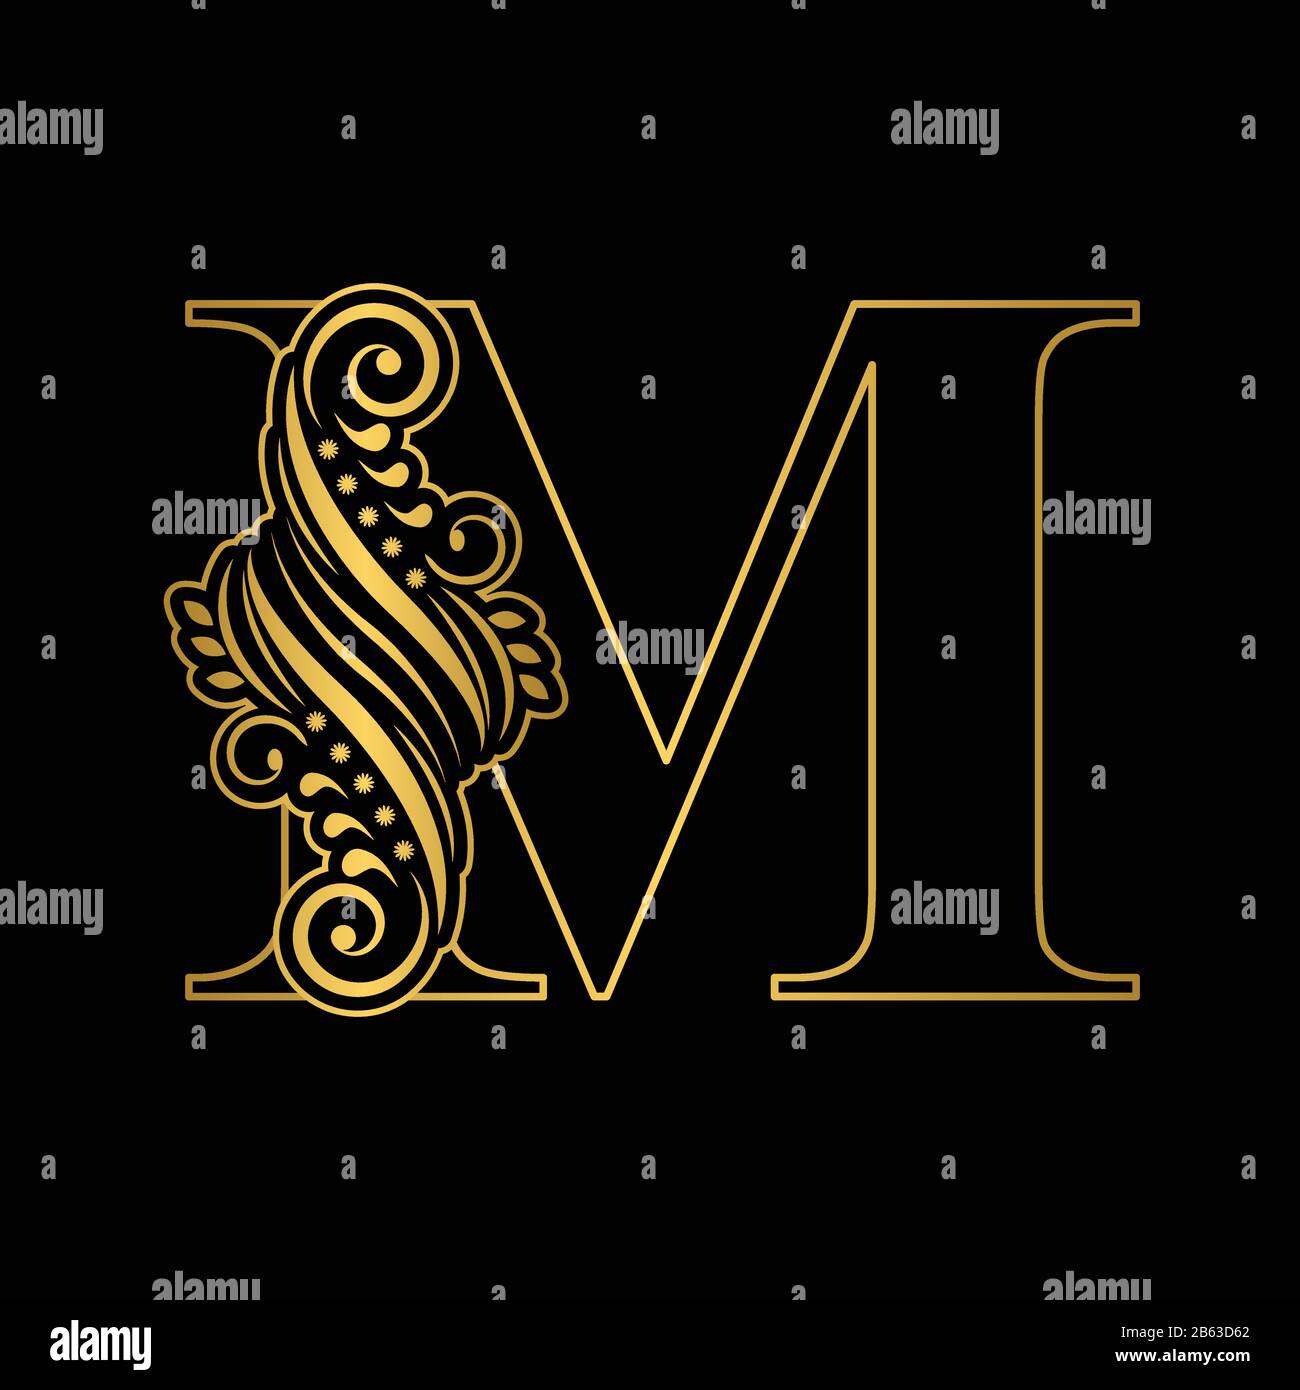 Minimal elegant AM black and gold color initial based letter icon logo